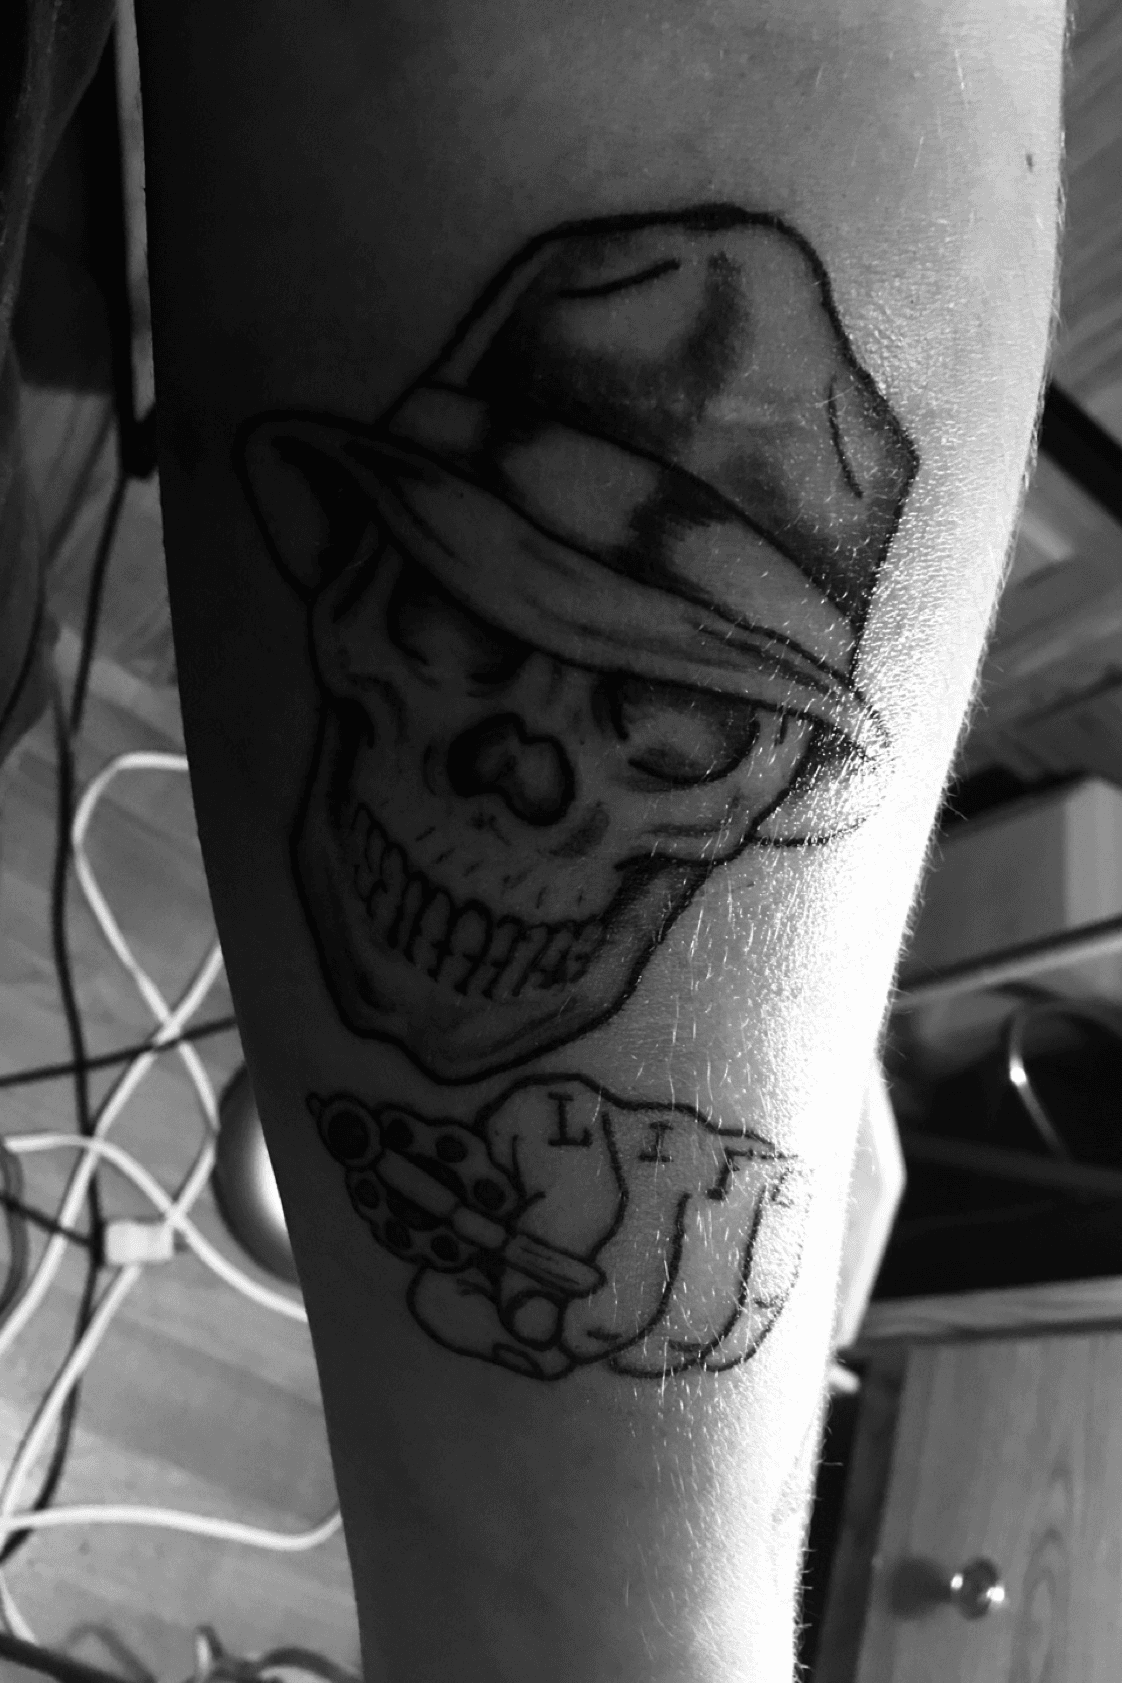 Skull n guns tattoo by SBRBOUS on DeviantArt